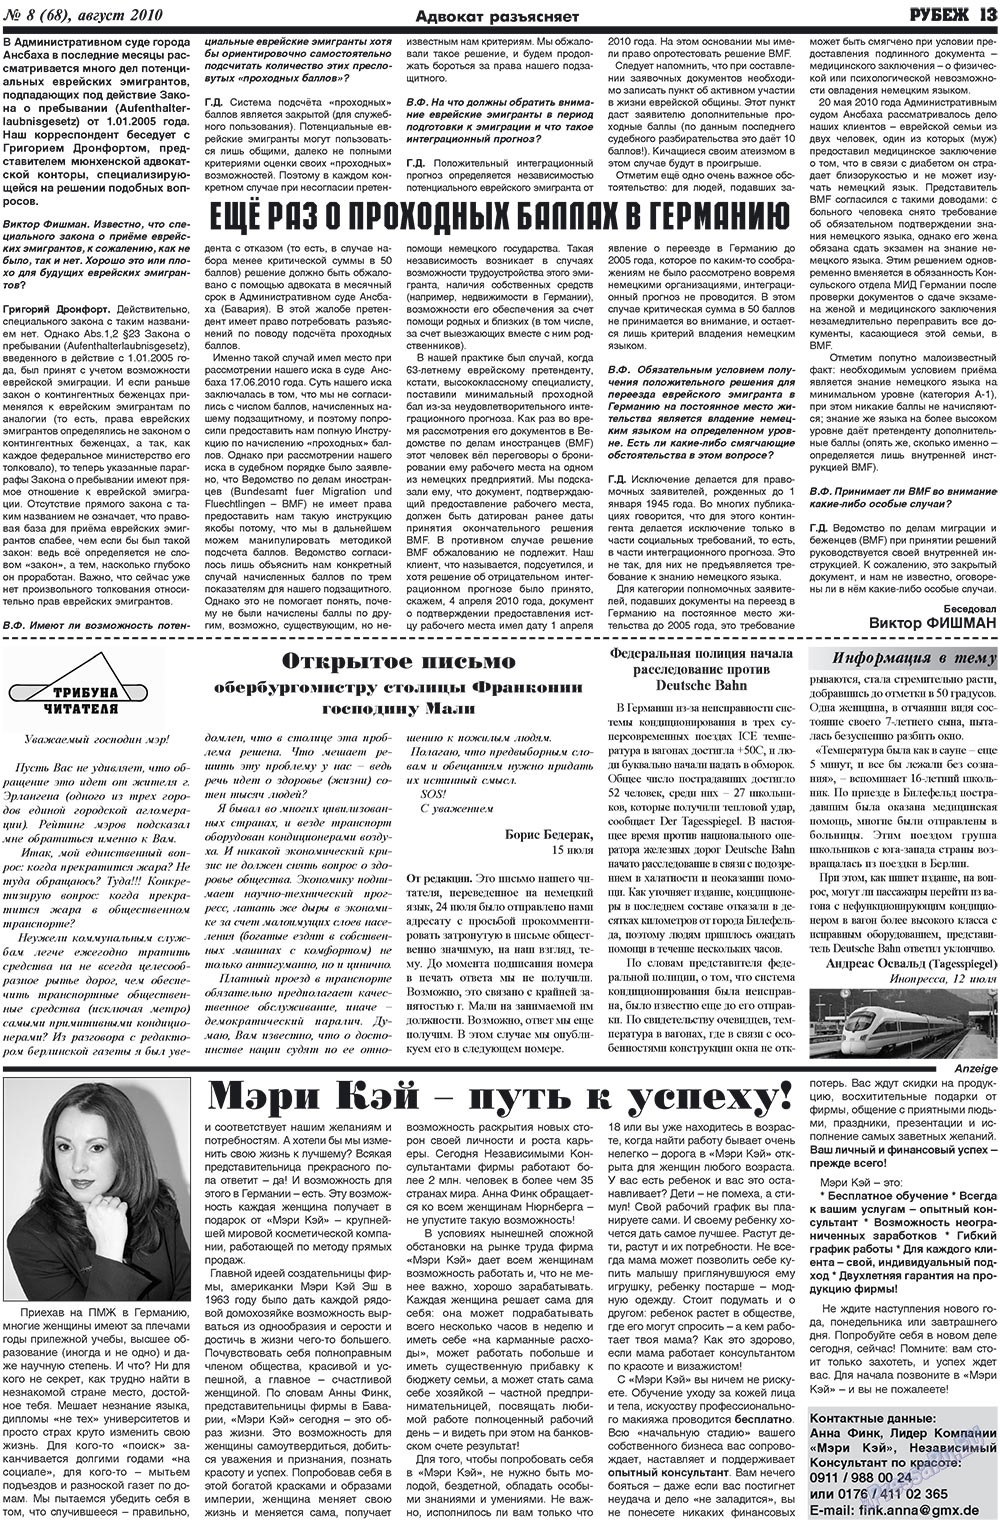 Рубеж, газета. 2010 №8 стр.13